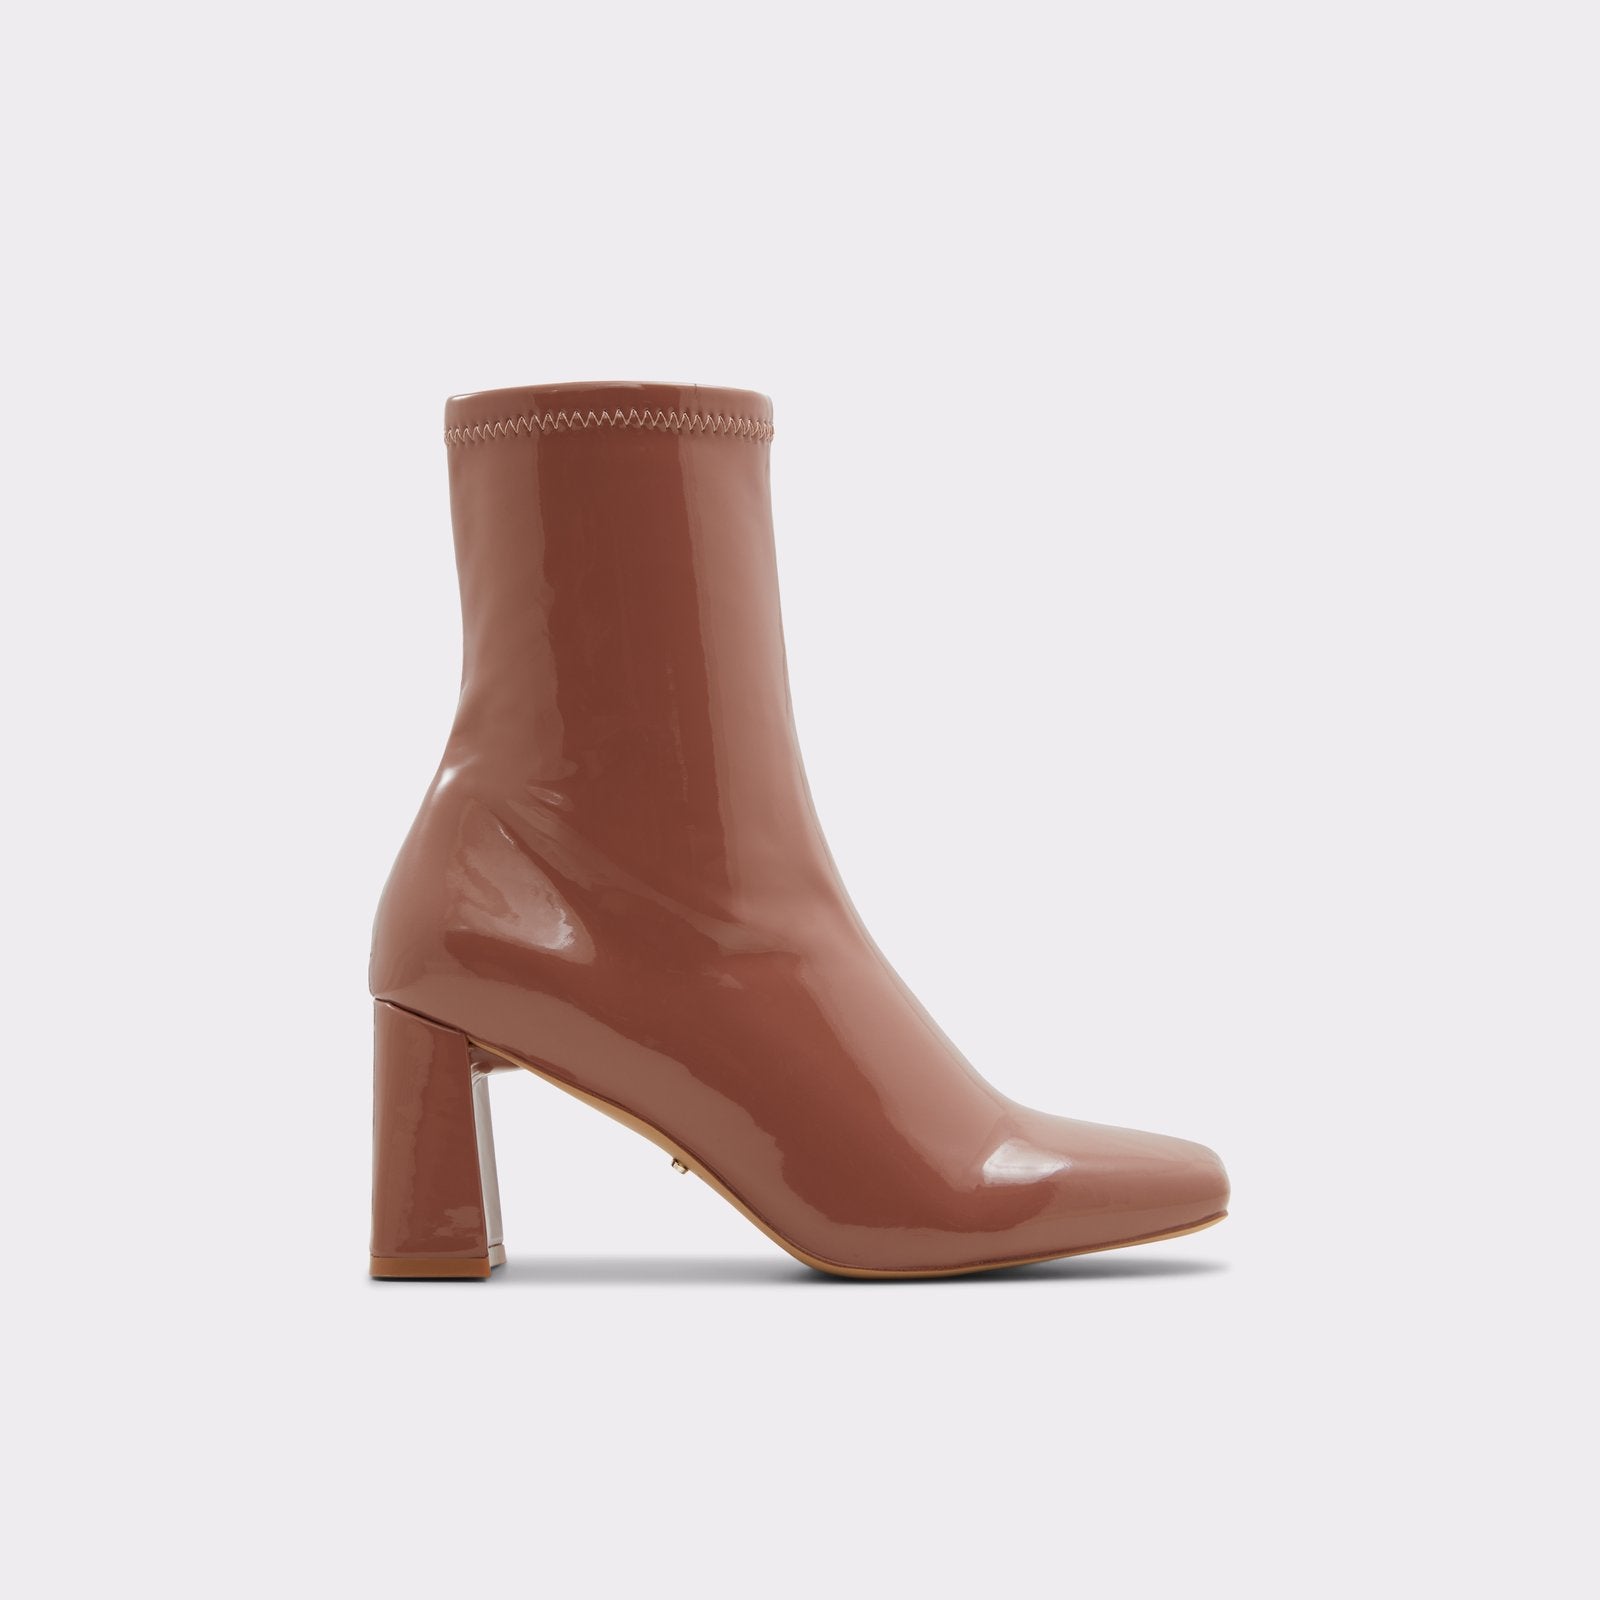 Aldo Women’s Ankle Boots Marcella (Rust)